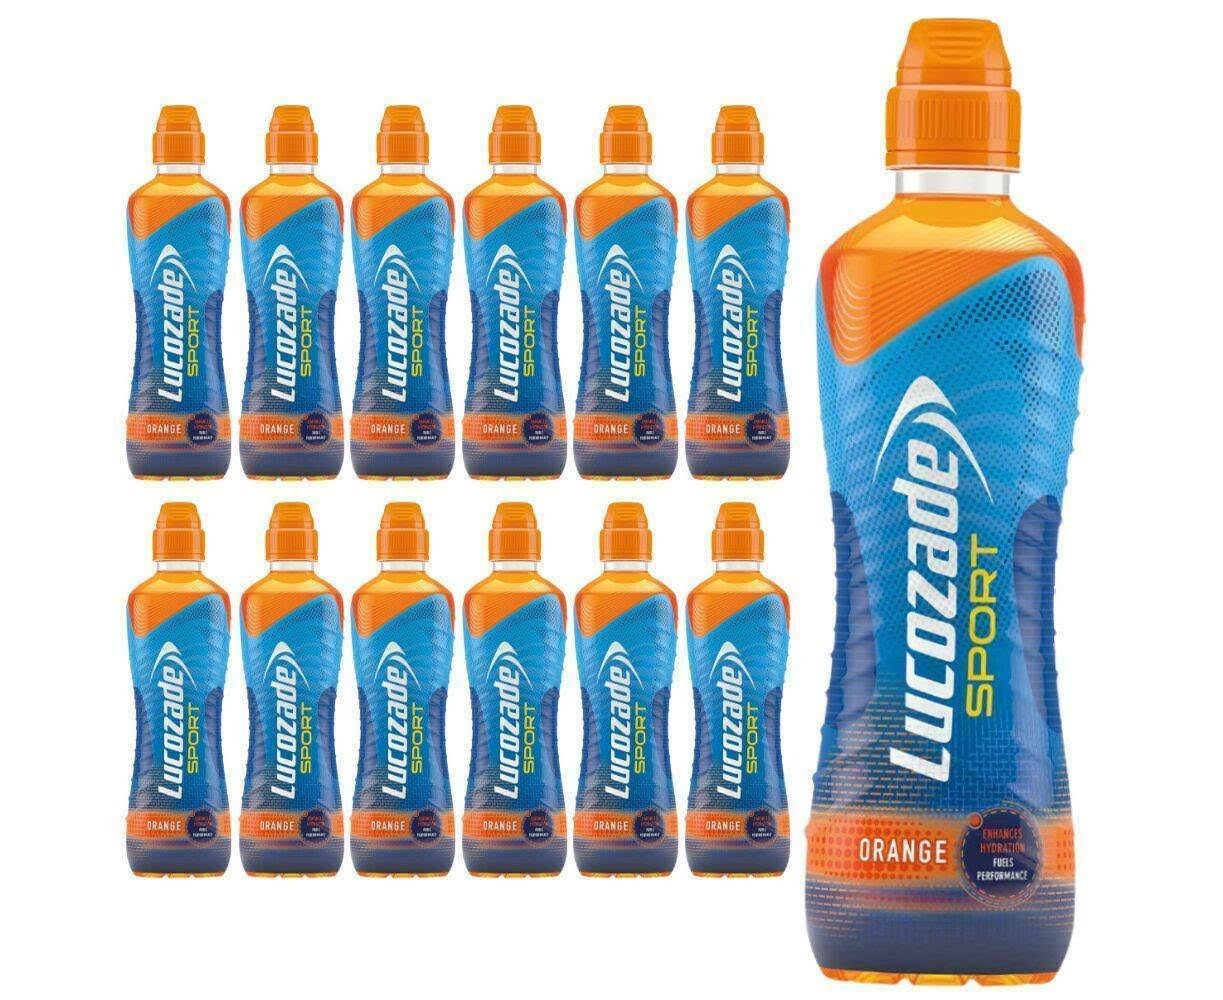 Lucozade Sport Drink - Orange, 500ml